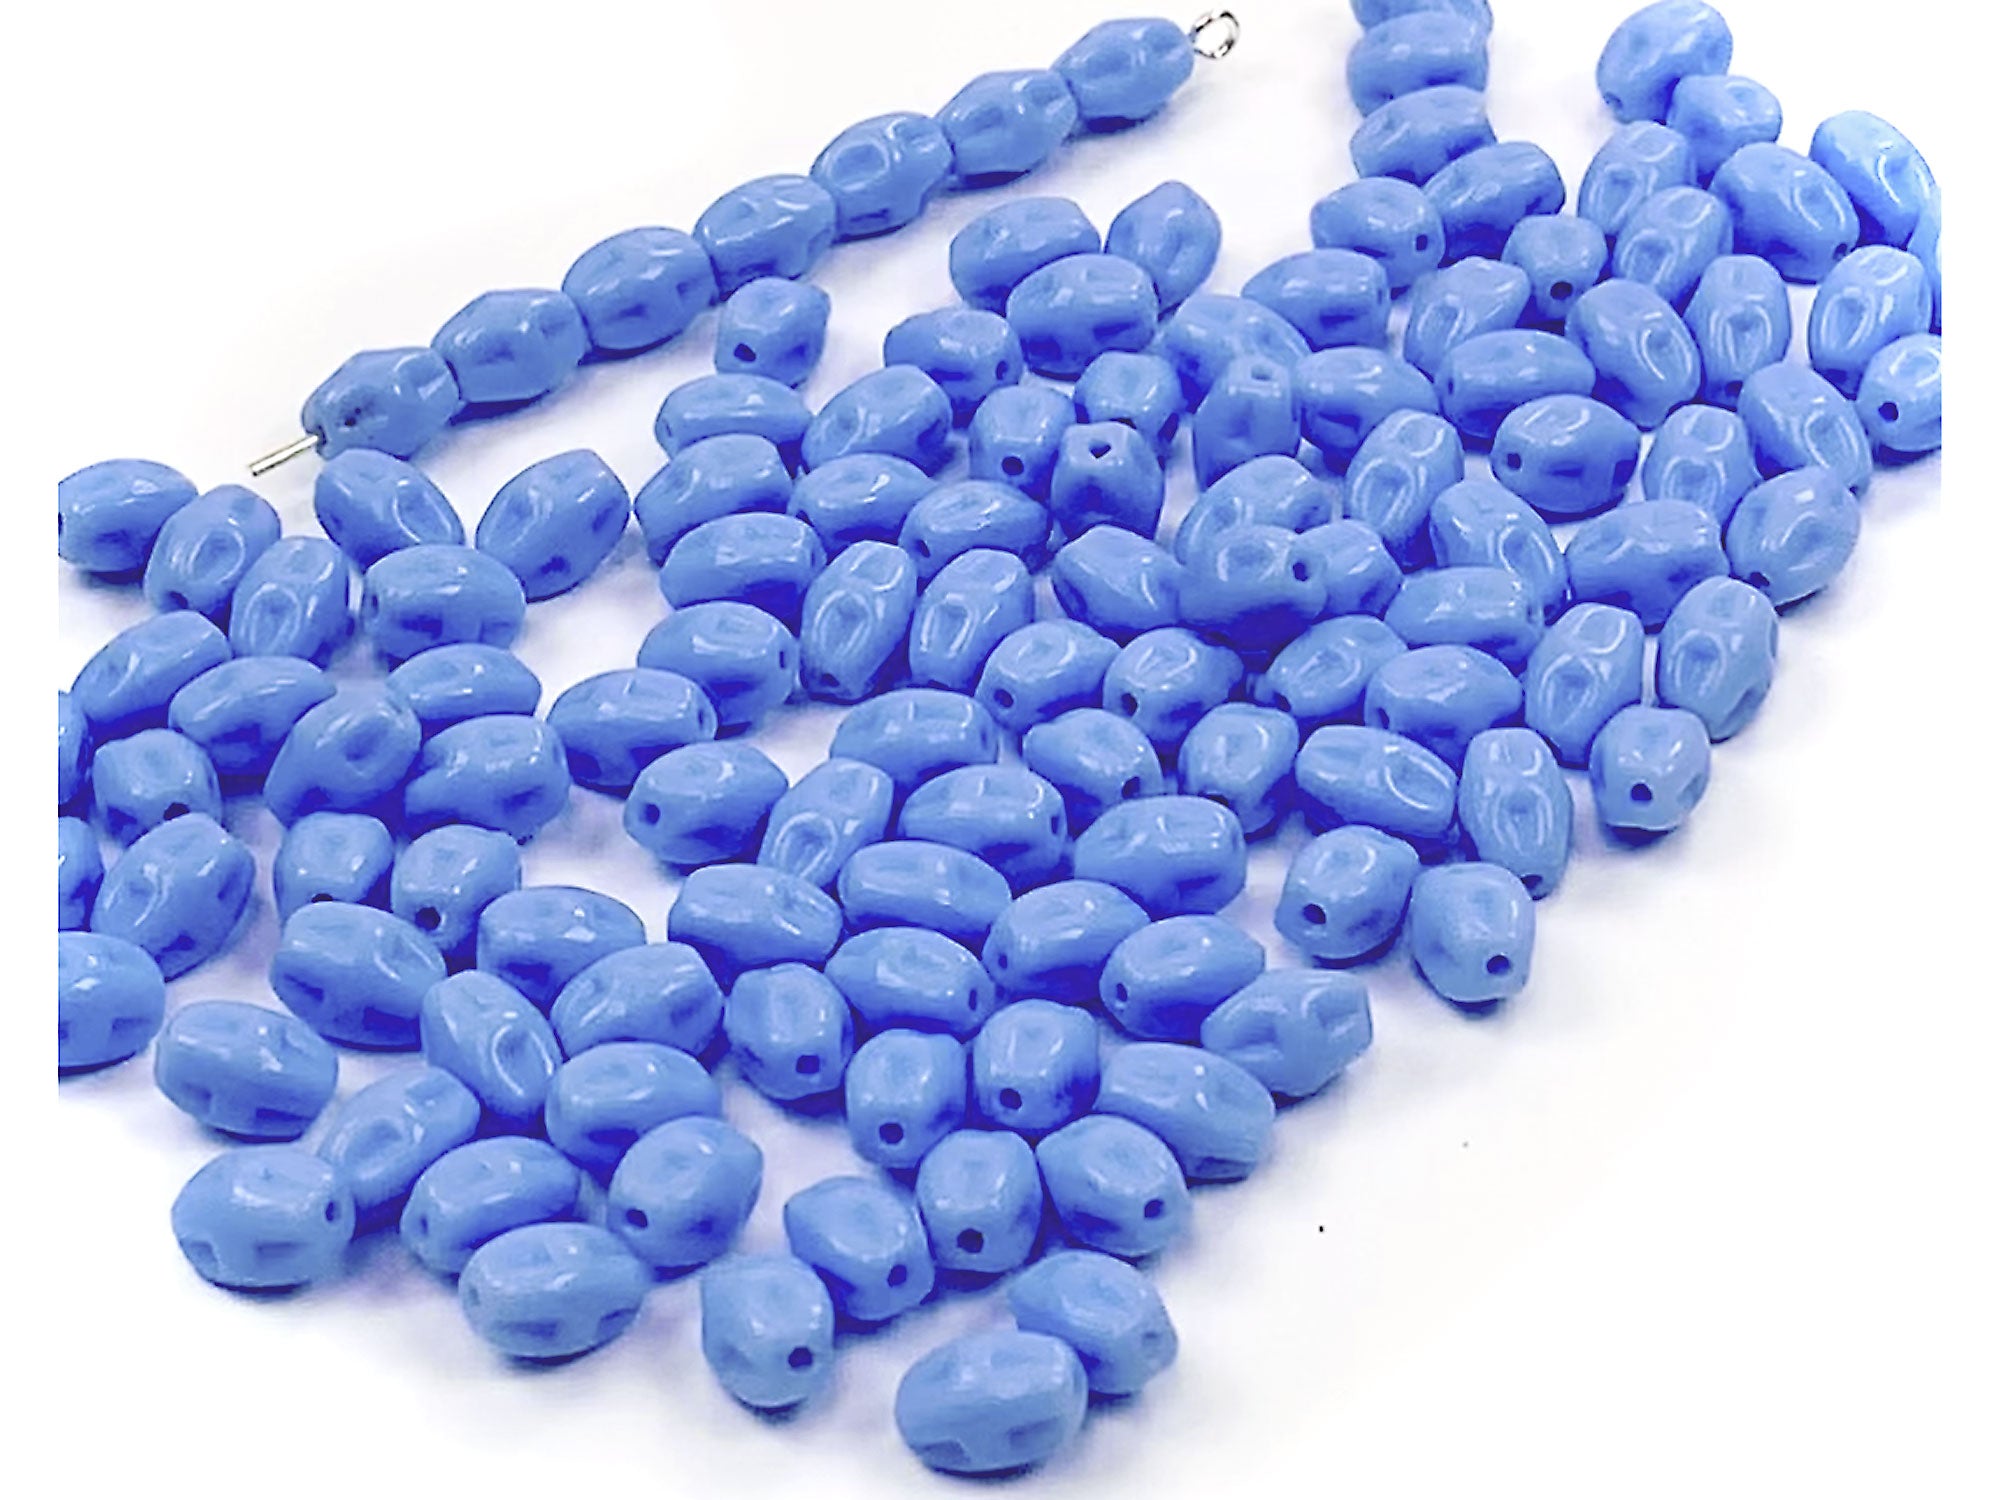 Czech Glass Druk Cross Beads in size 7x5mm, Blue Opaque color, 50pcs, P905